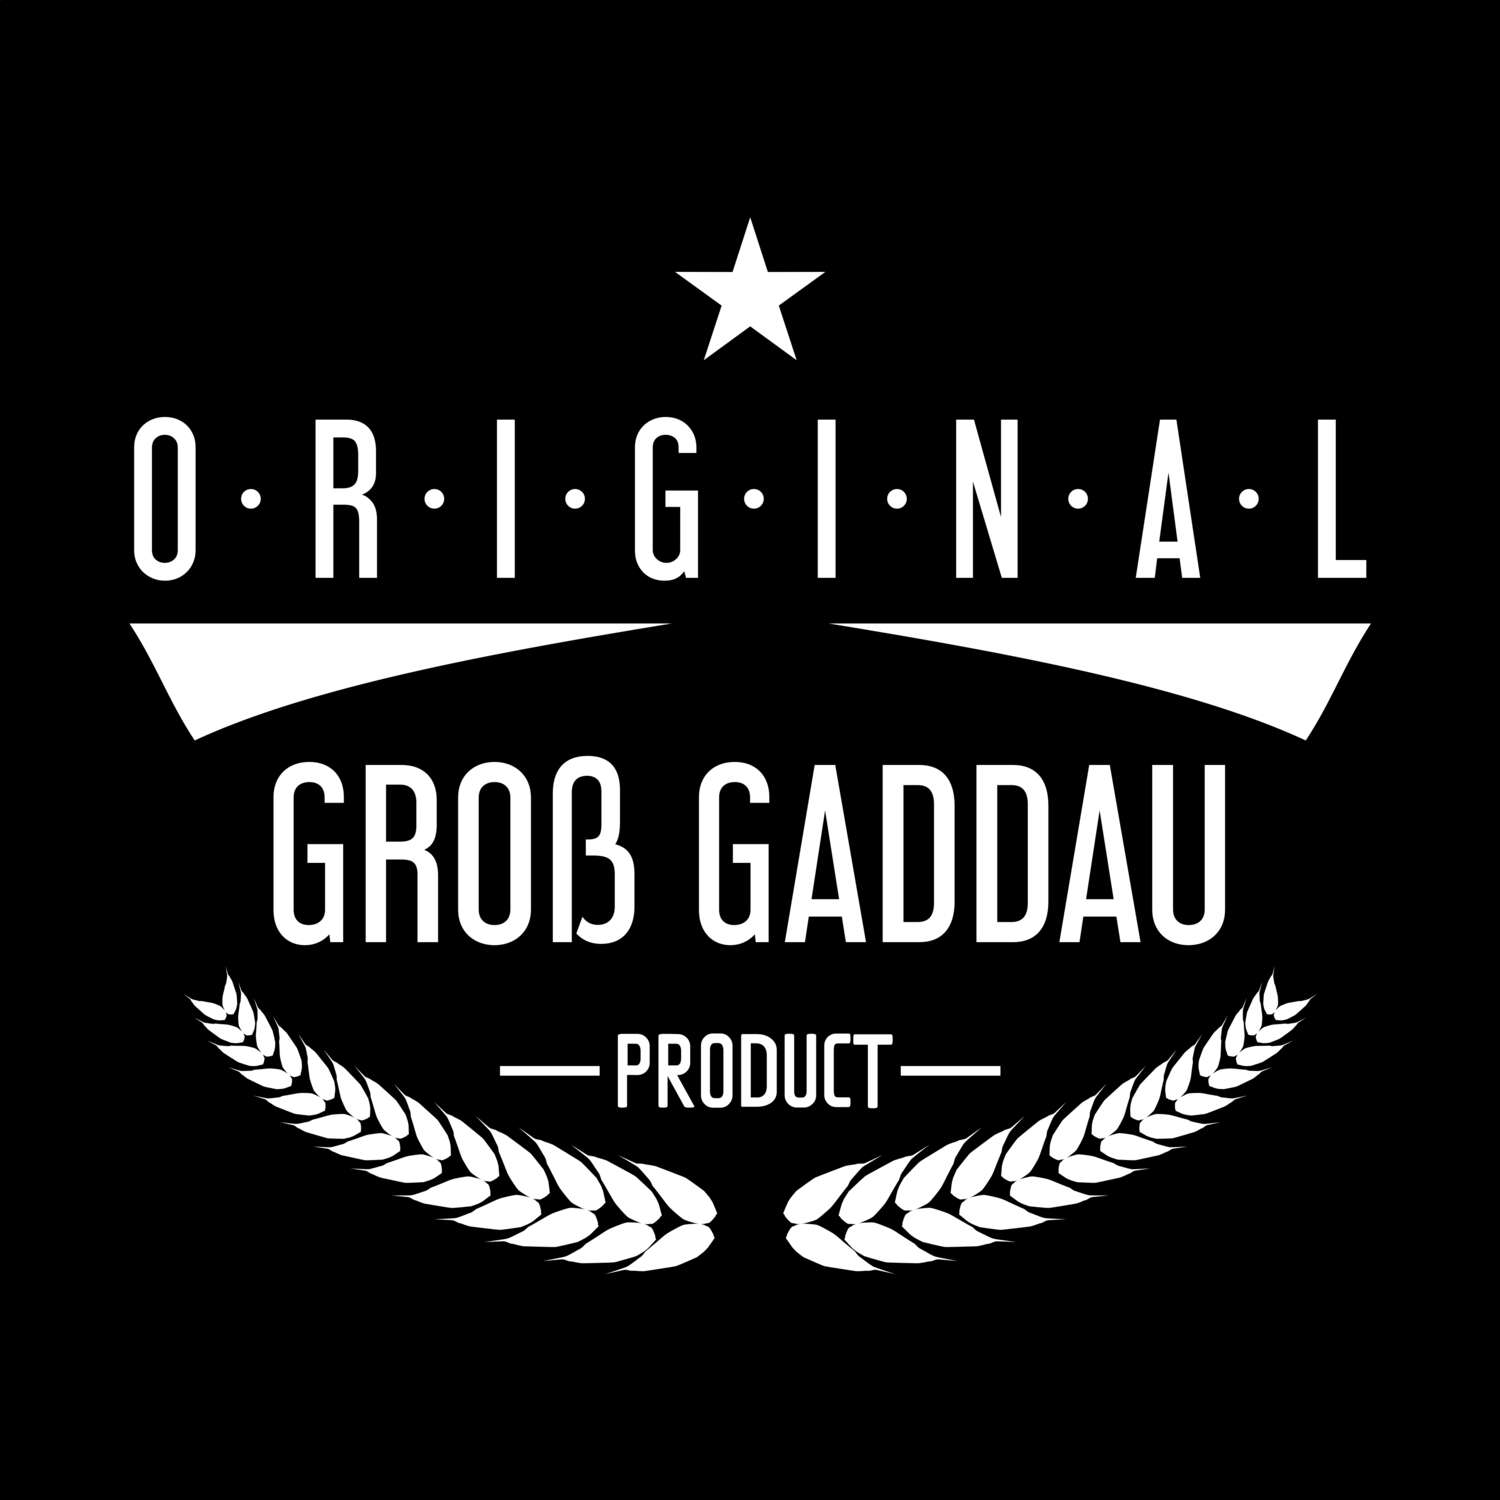 Groß Gaddau T-Shirt »Original Product«